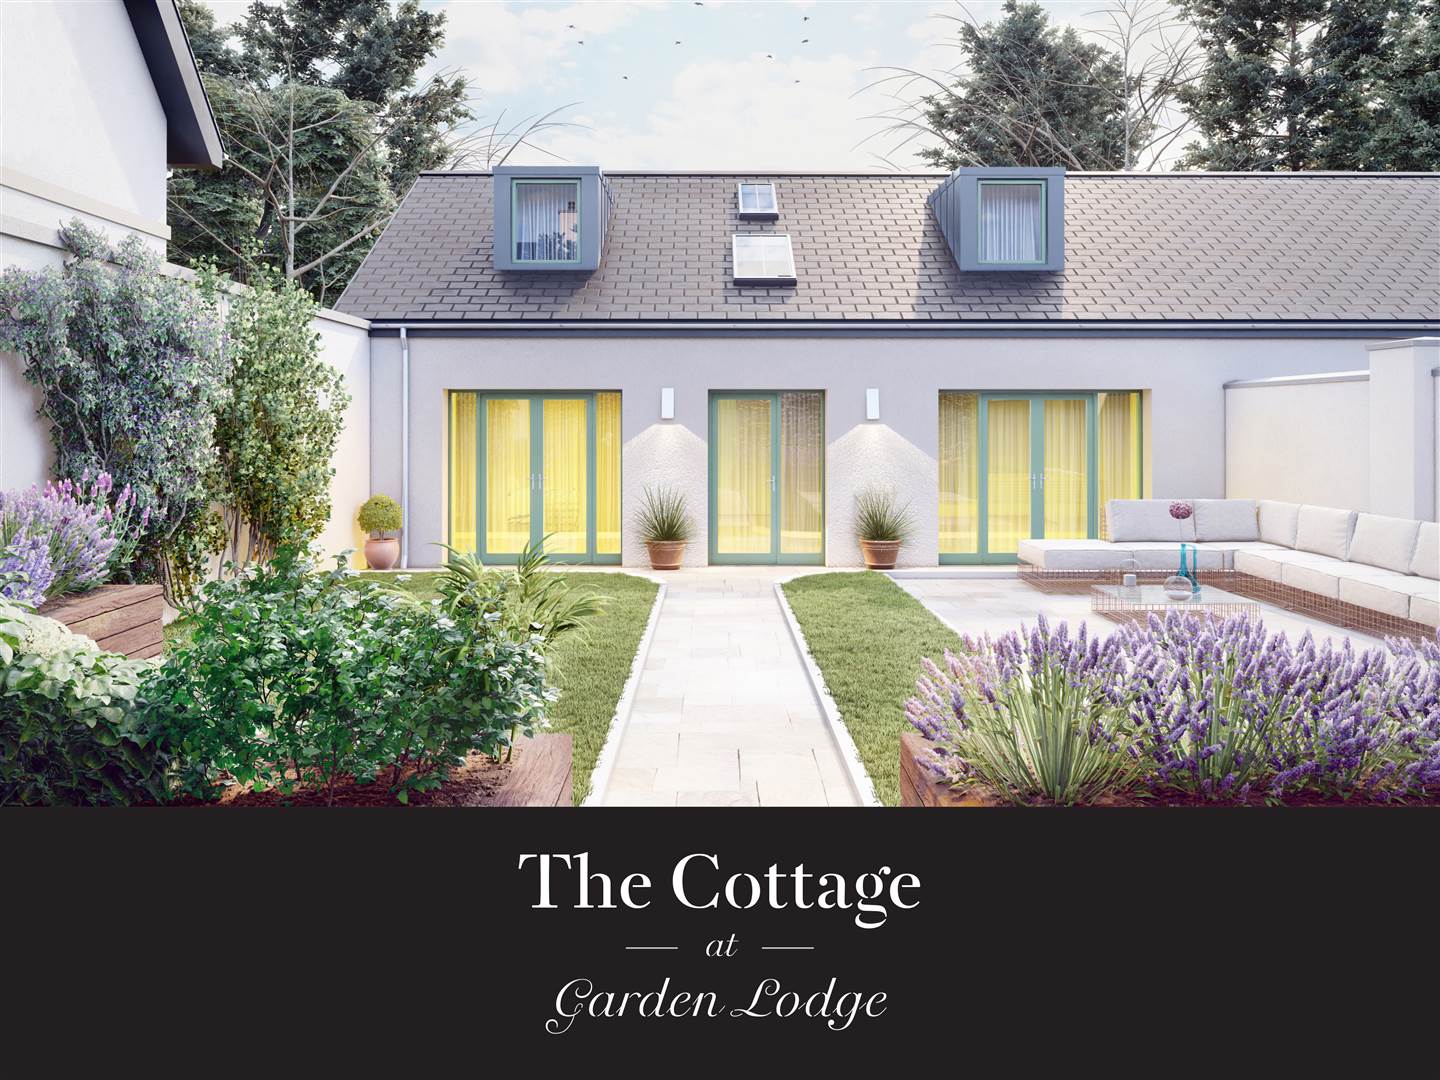 The Cottage @ Garden Lodge